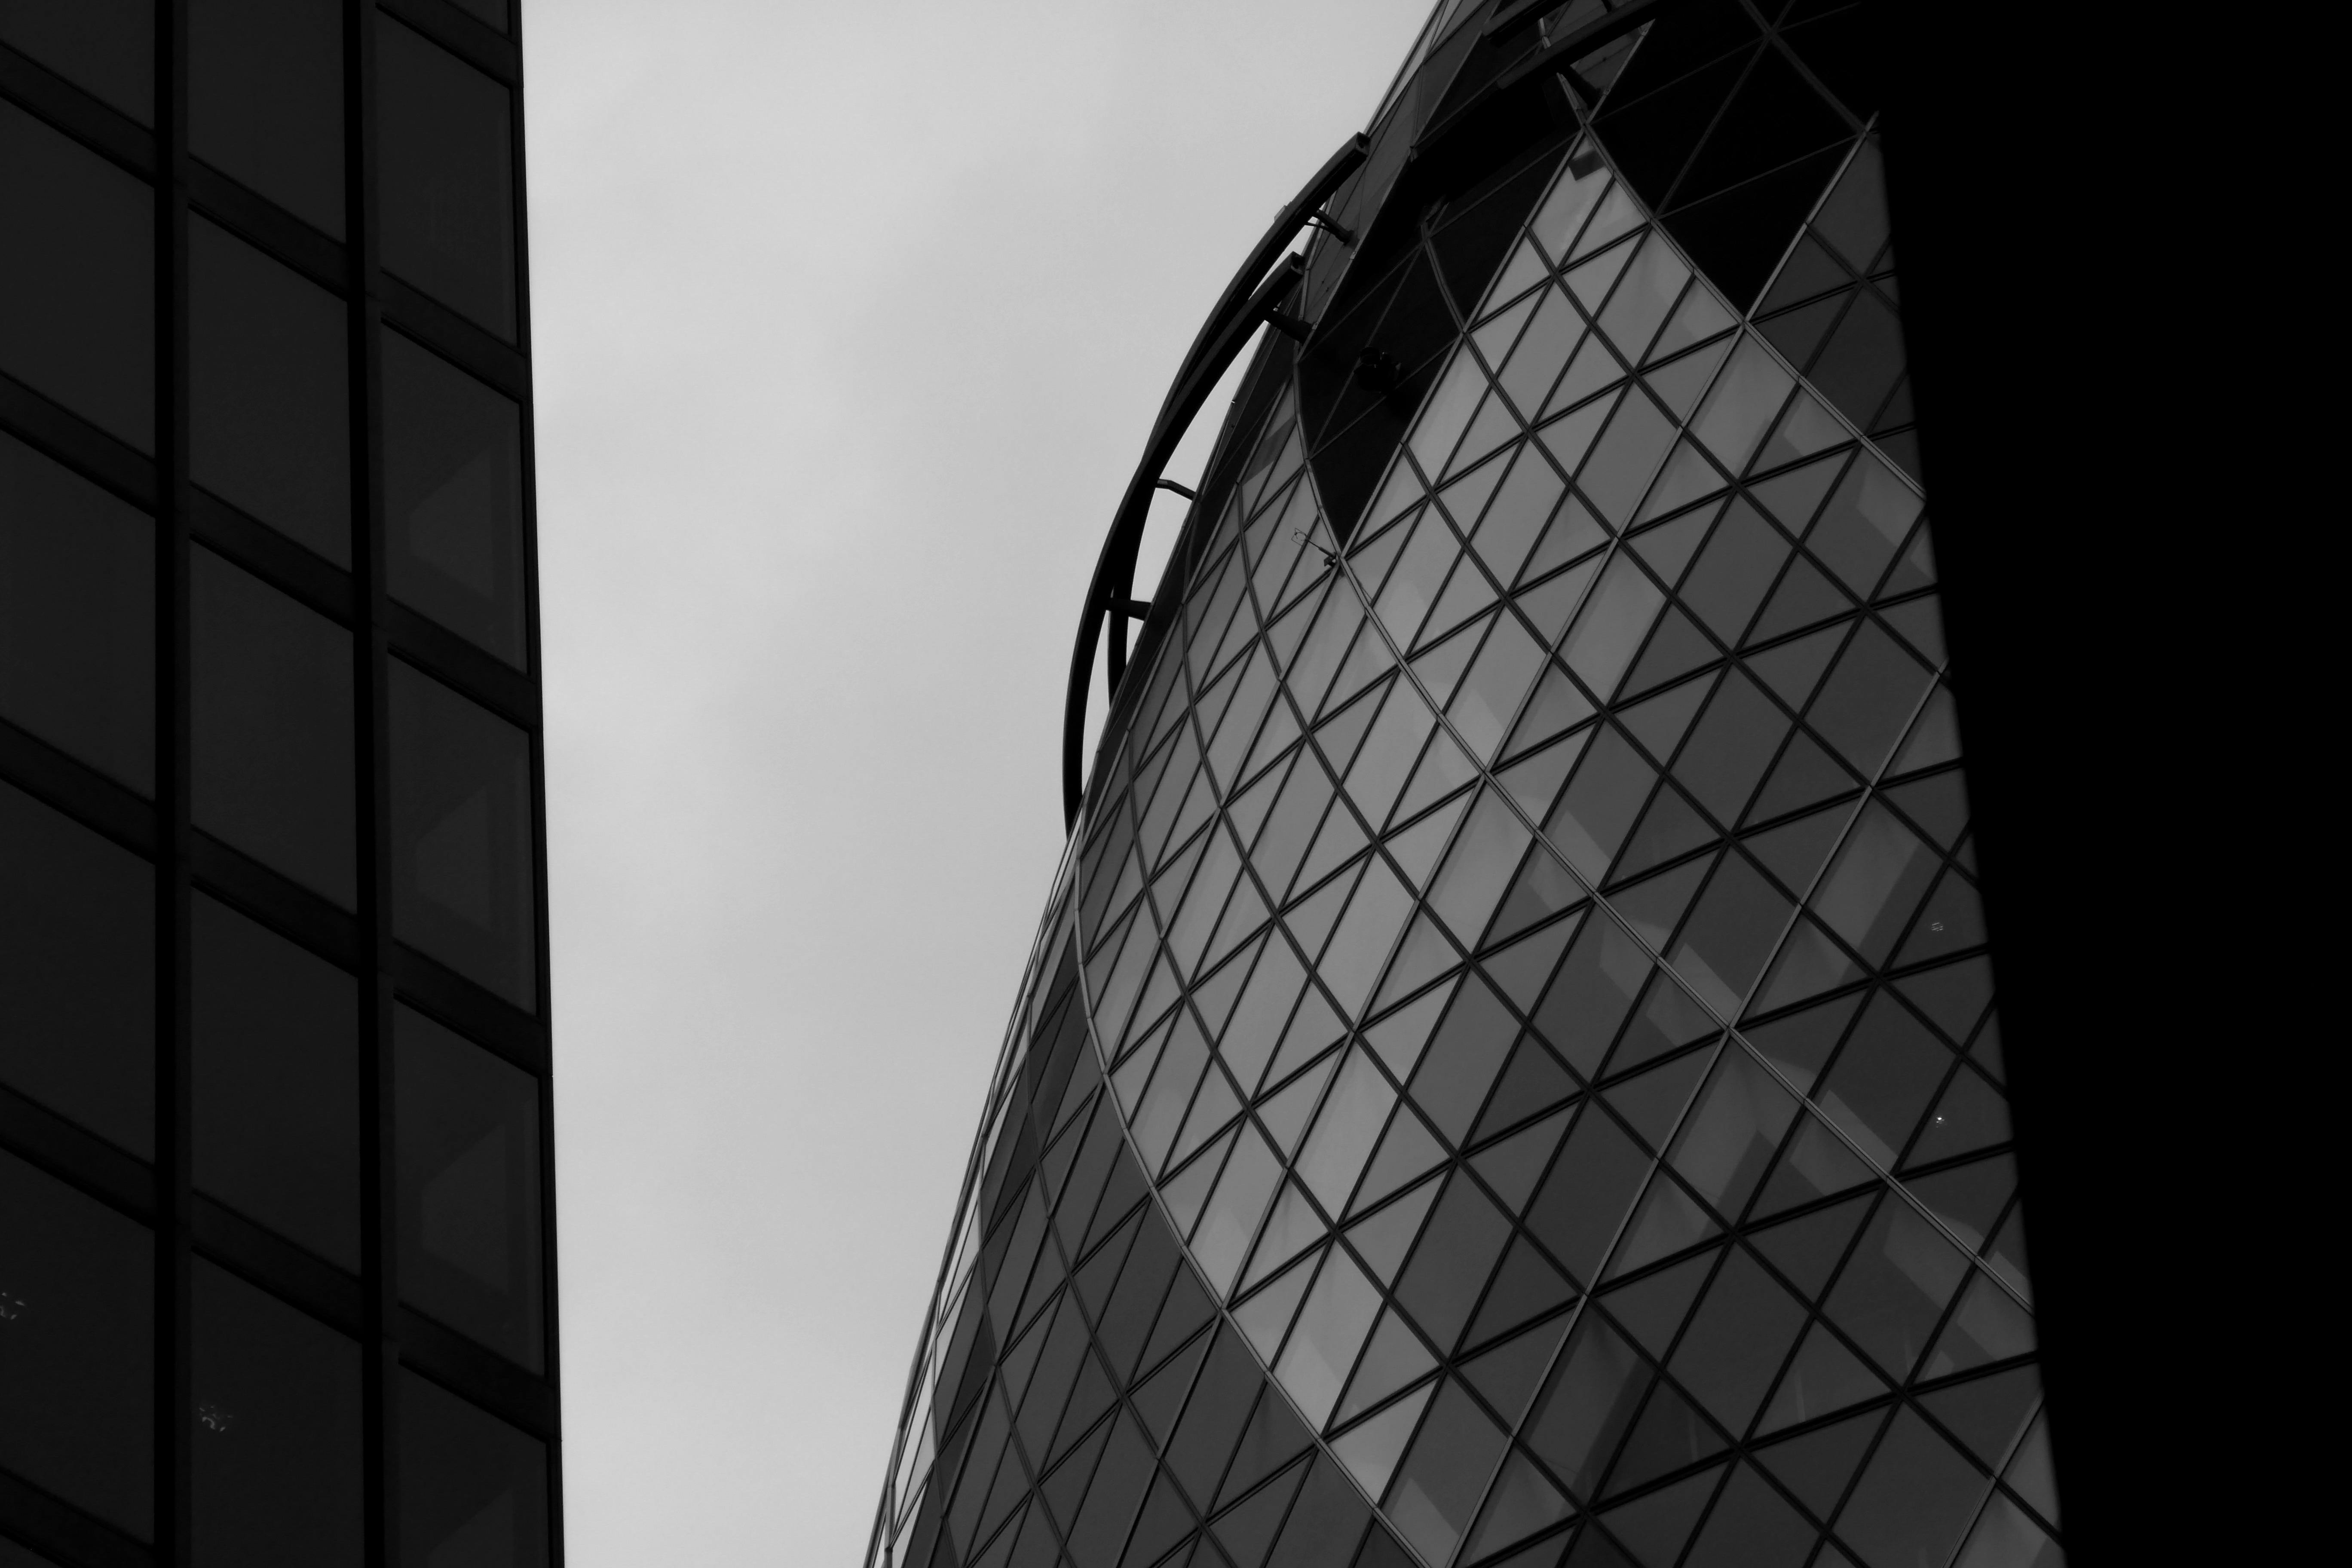 London Monochrome Photos, Download The BEST Free London Monochrome ...